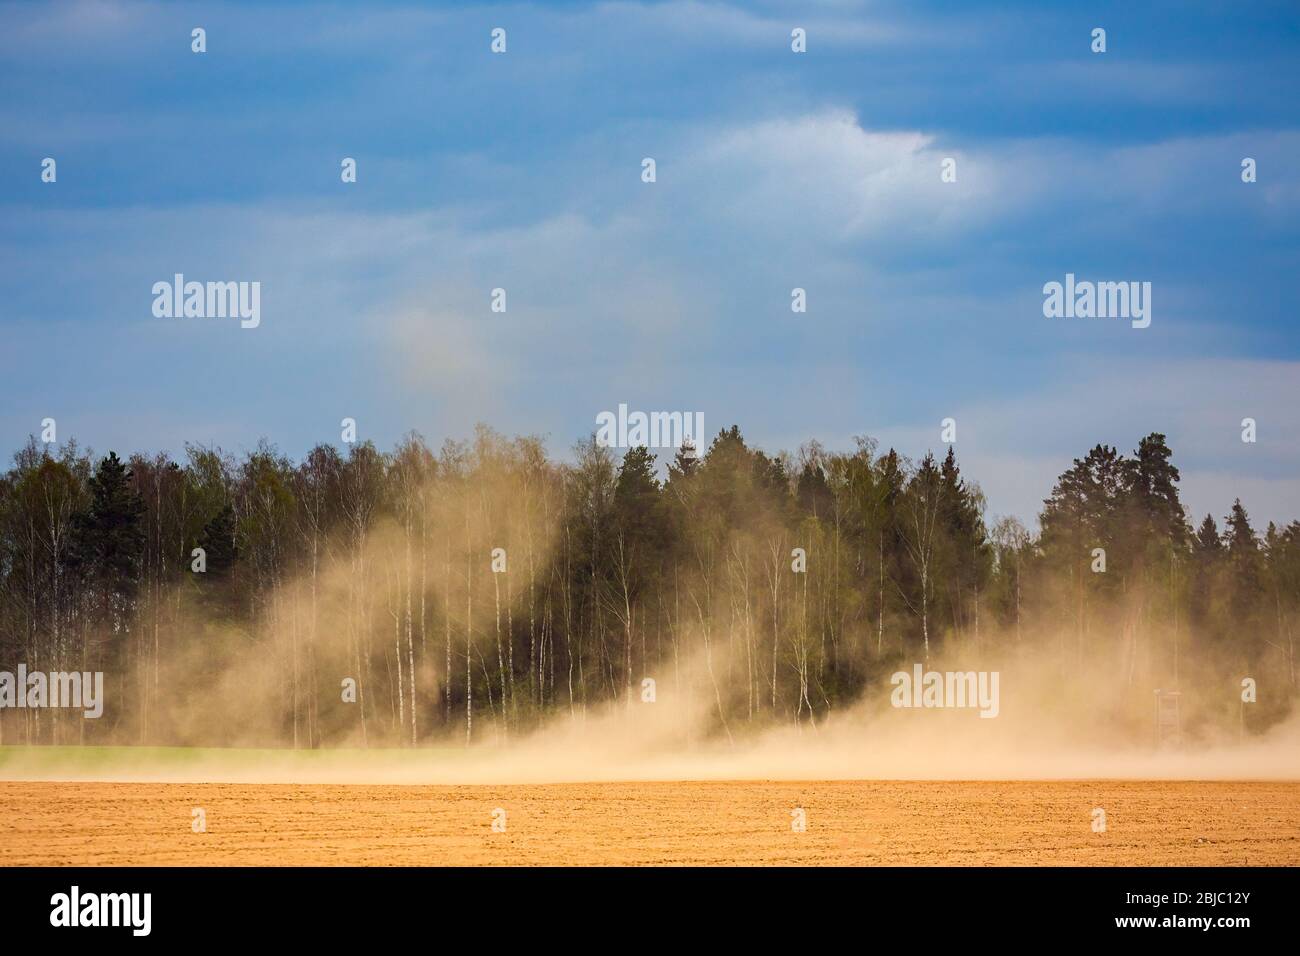 Staubsturm auf trockenen Feldern, trockenes Wetter durch den Klimawandel Stockfoto